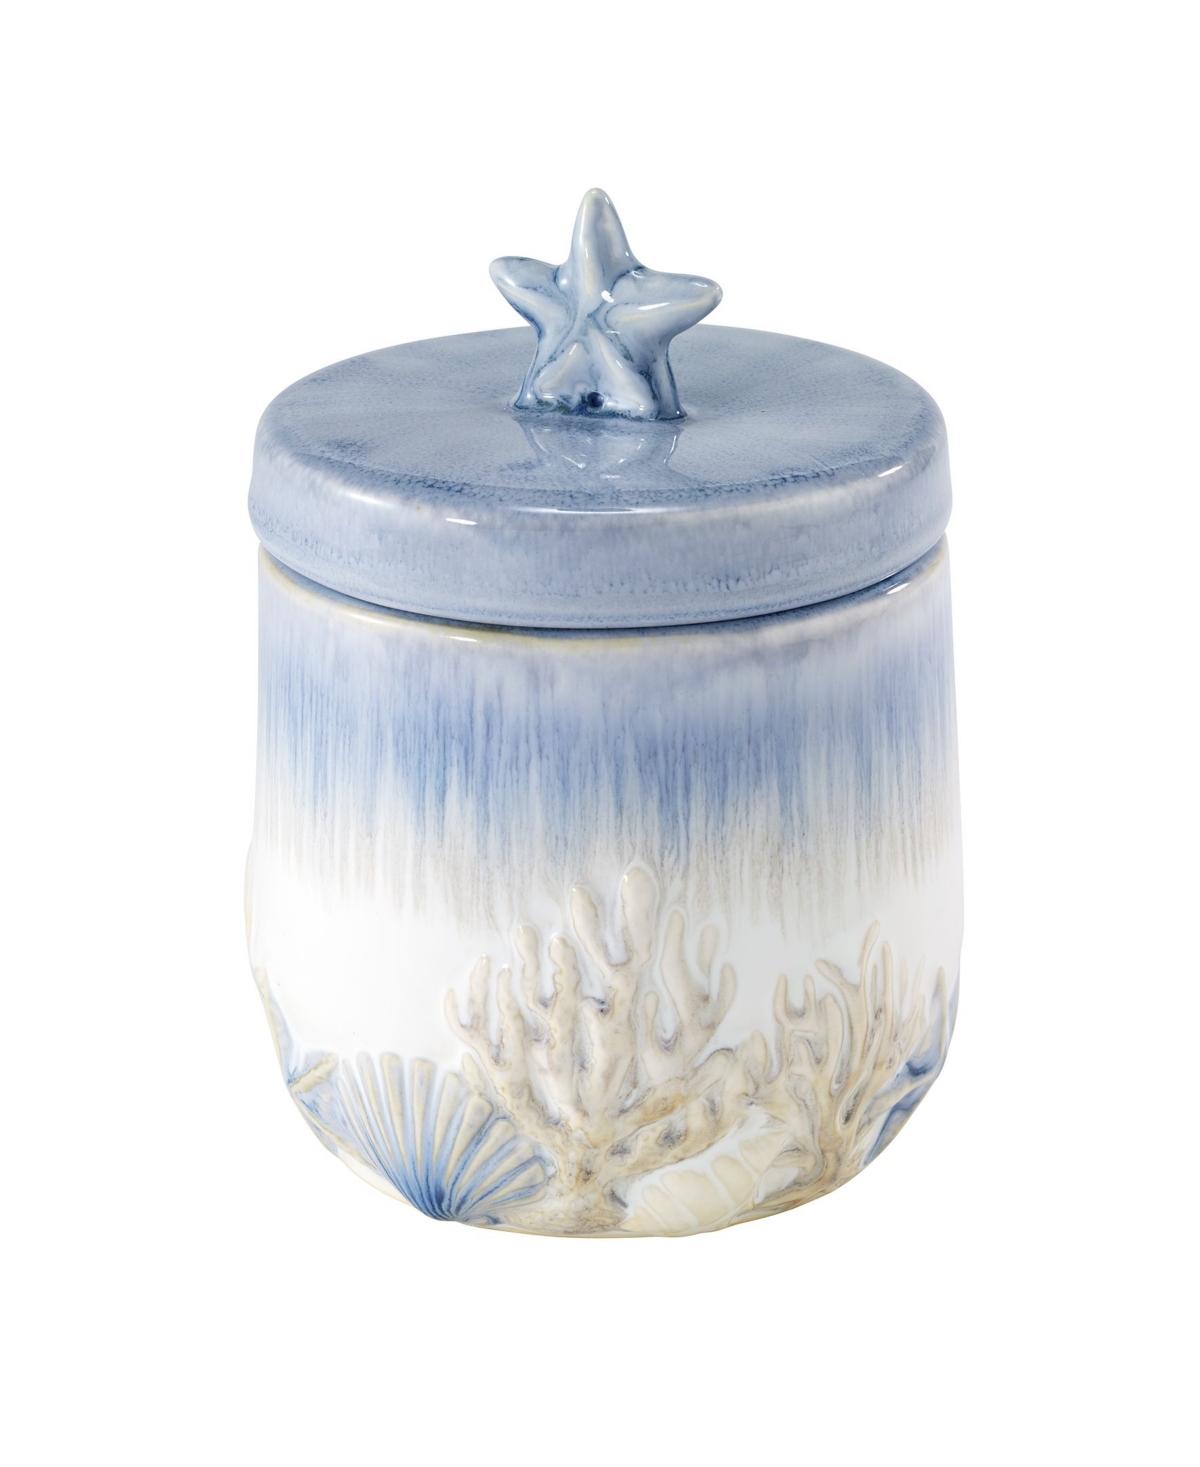 Abstract Coastal Seashells & Coral Ceramic Covered Jar - Multi